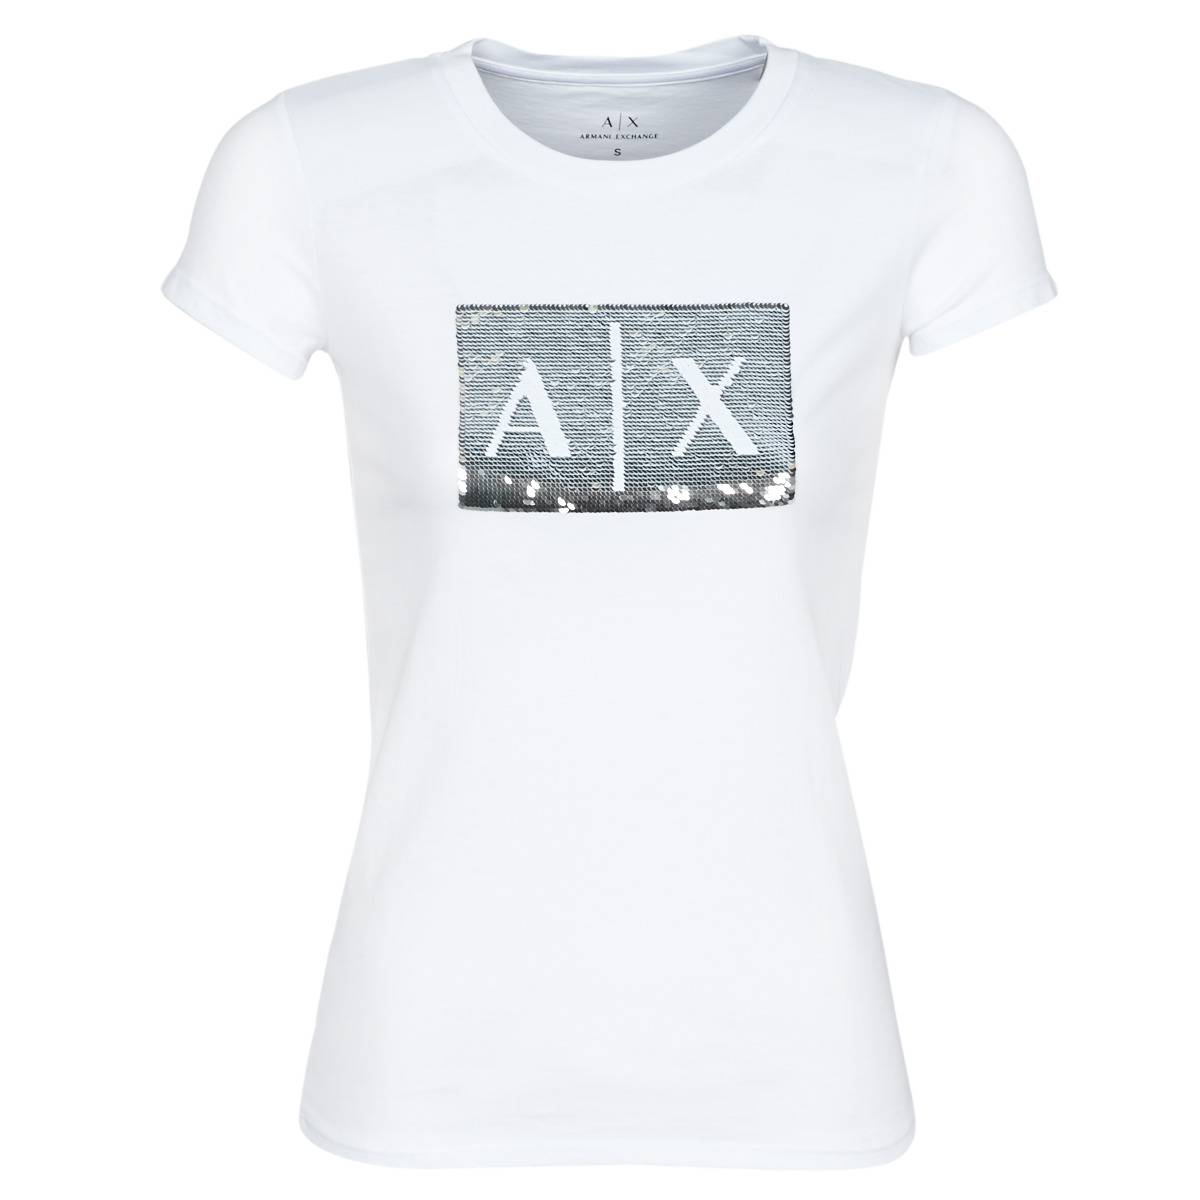 Clothing Women Short-sleeved t-shirts Armani Exchange HANEL White